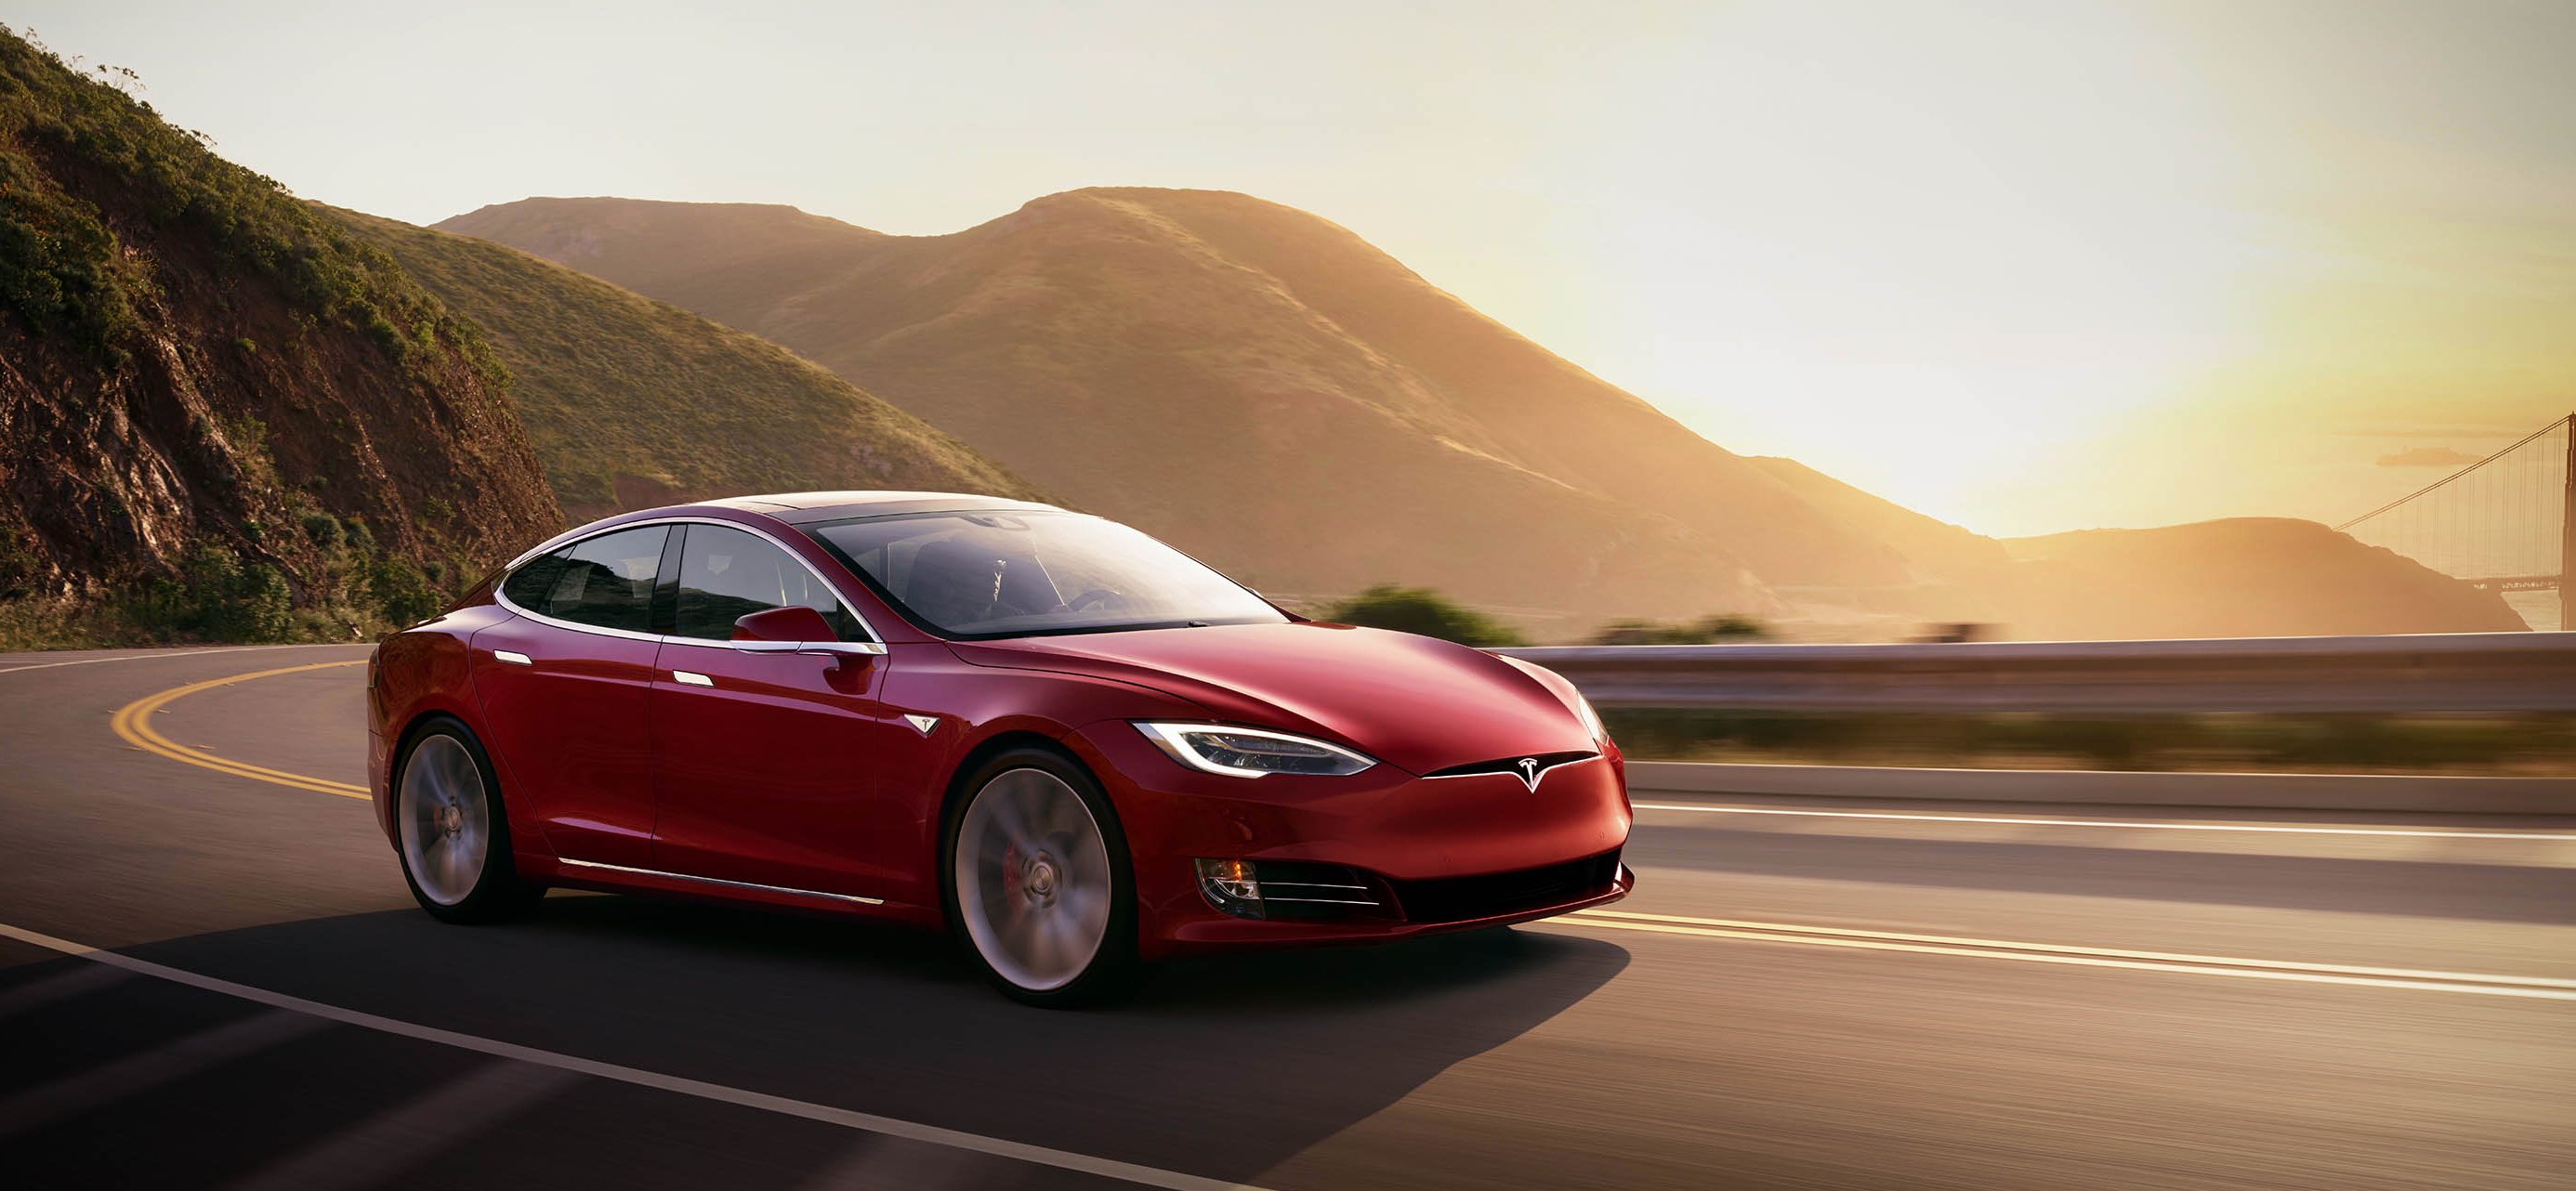 Tesla's new 4680 cylindrical battery